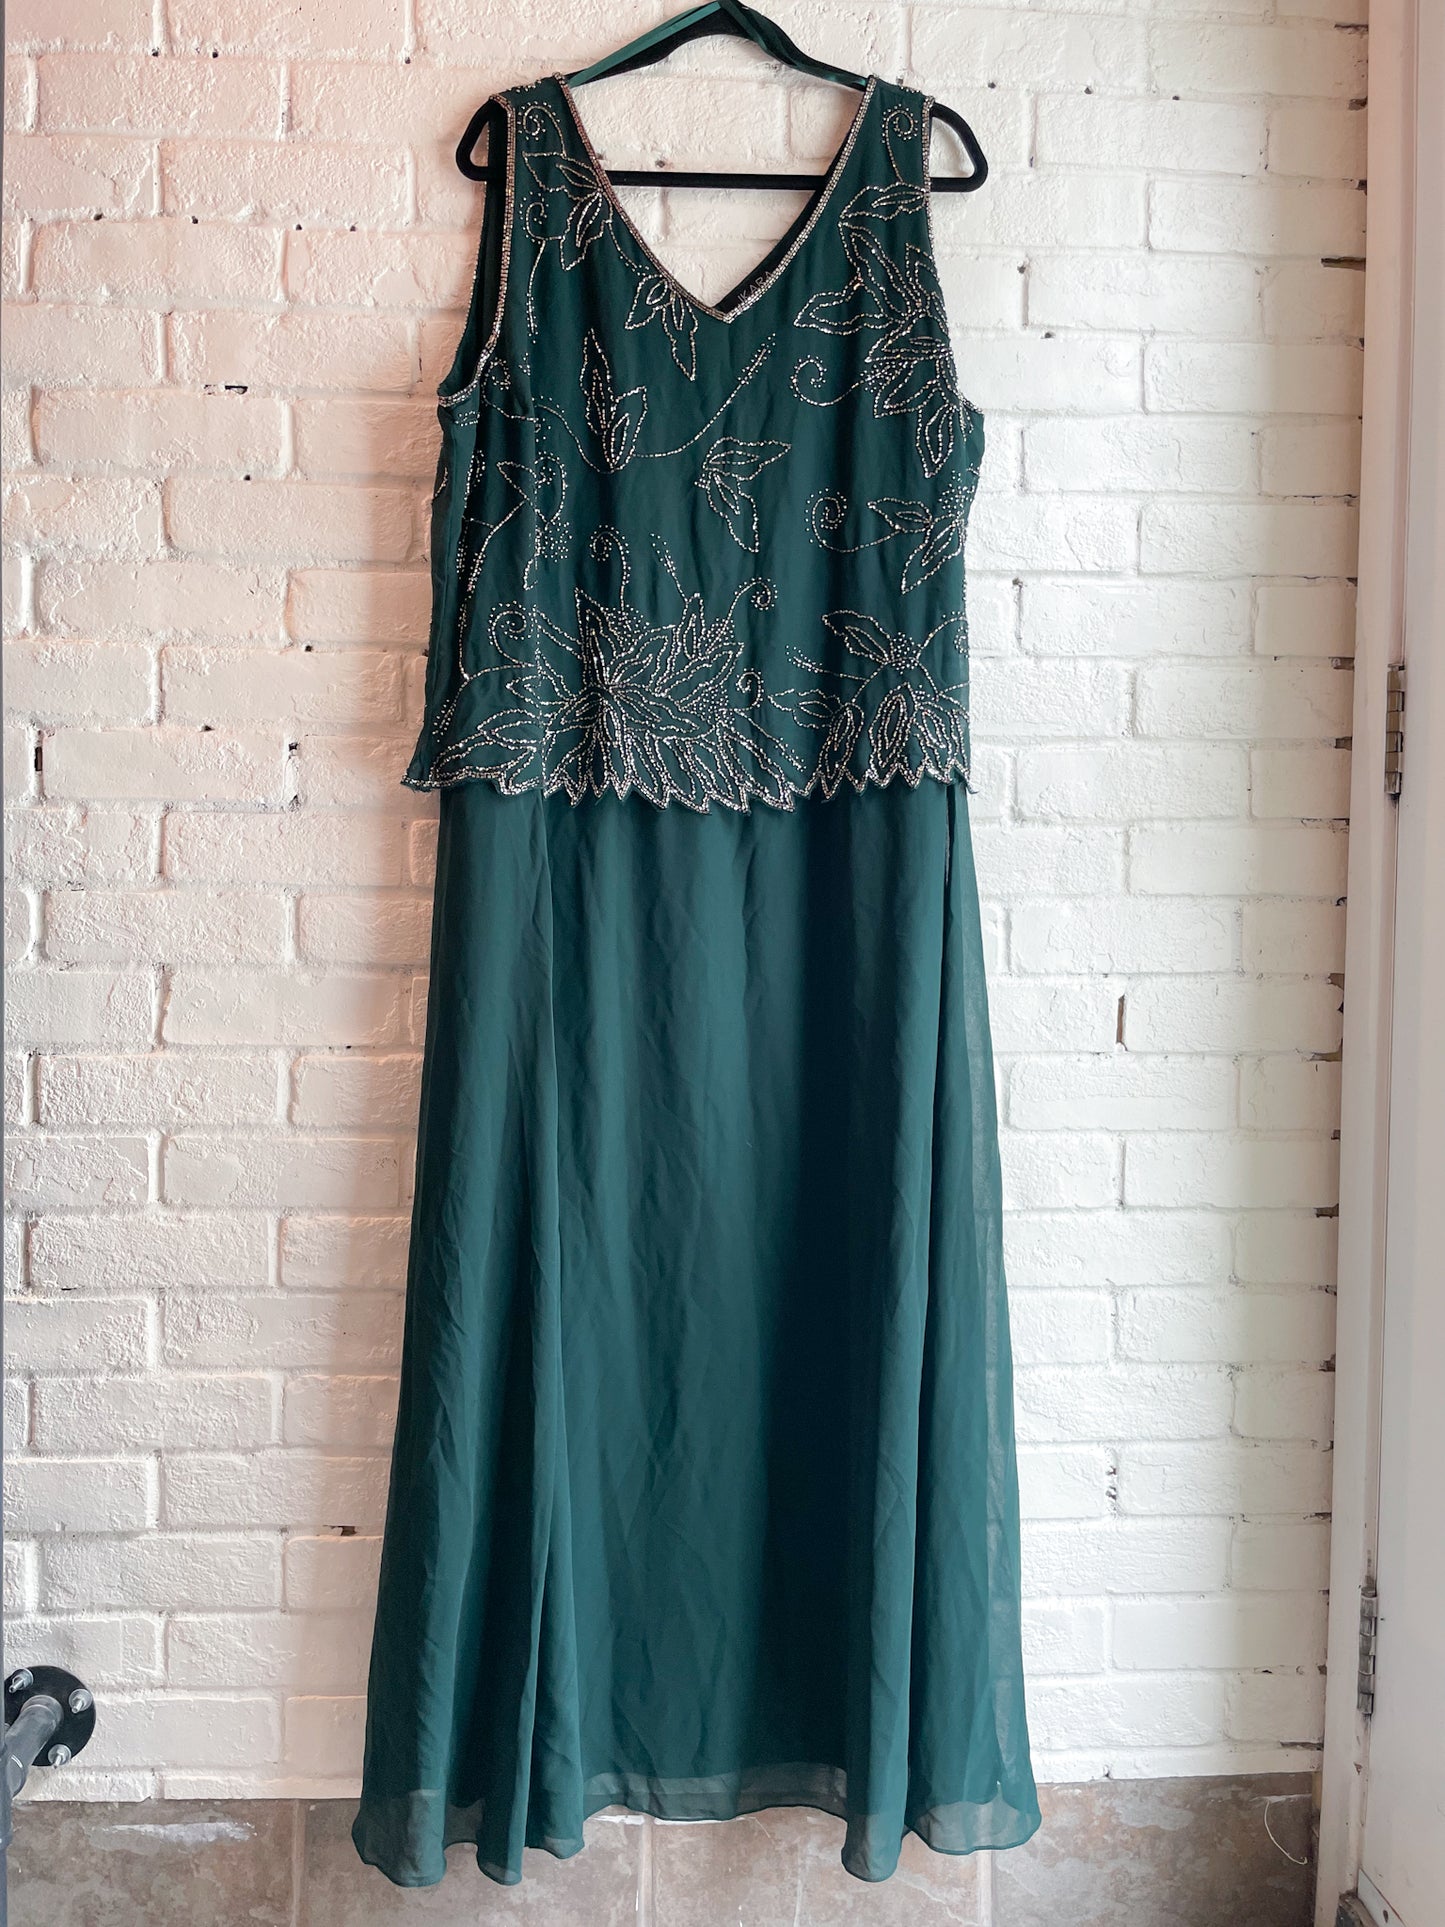 Jkara Hunter Green Beaded Long Dress NWOT - Size 20